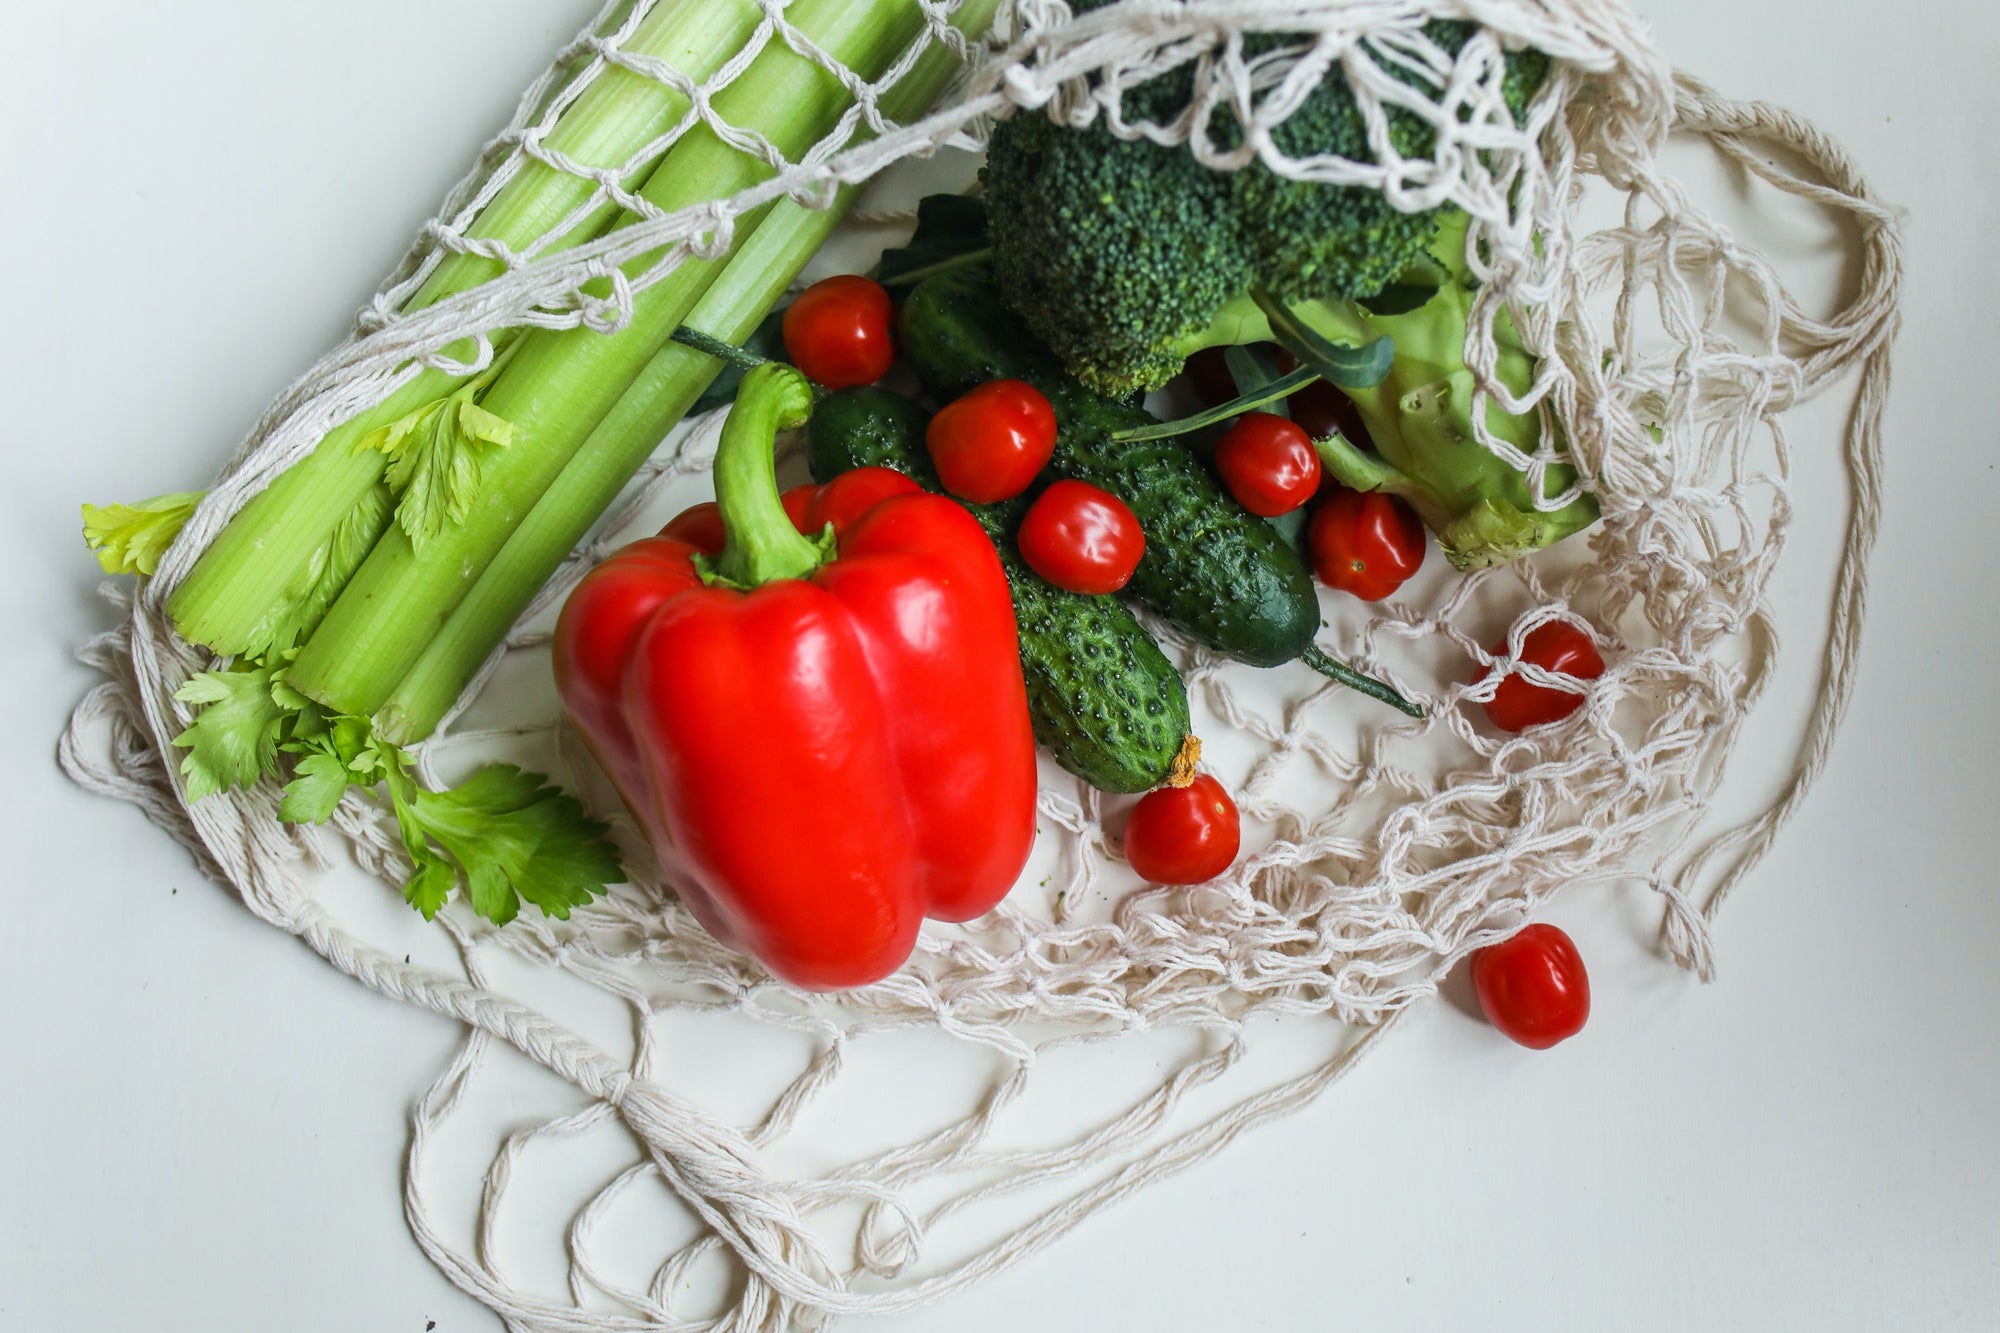 Gemüse (Sellerie, Paprika, Tomaten, Gurken, Brokkoli) in Einkaufsnetz